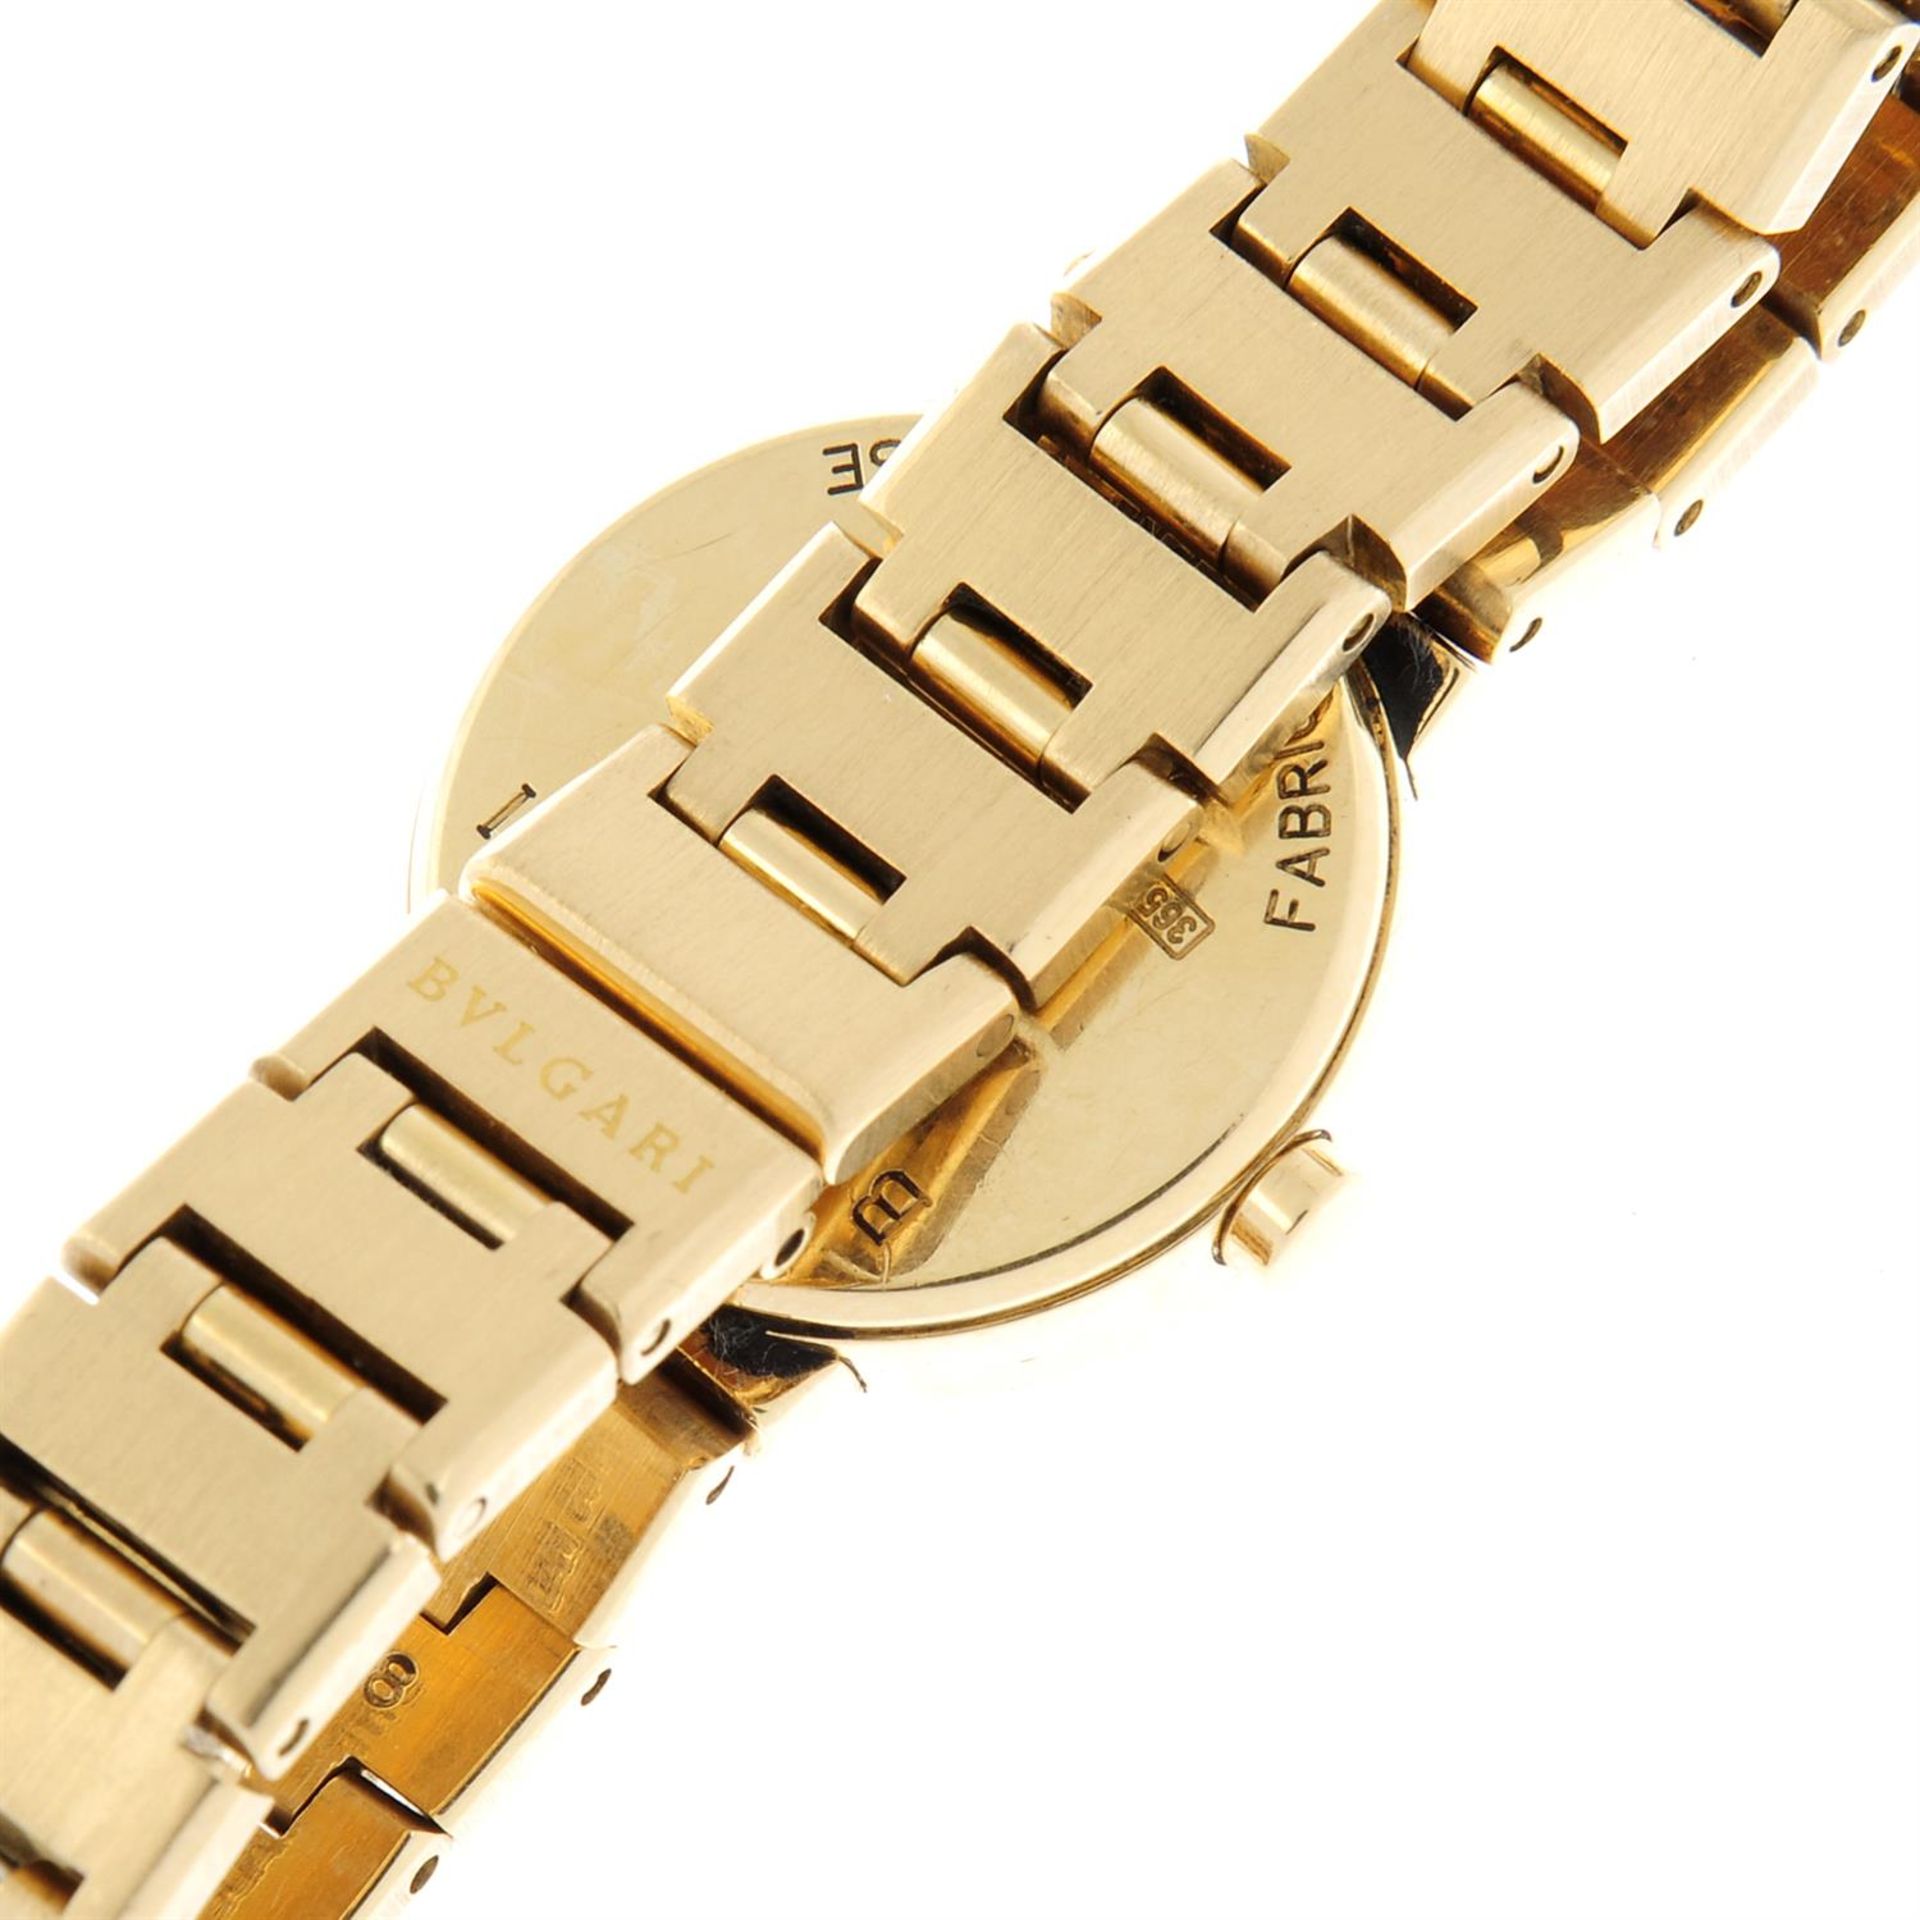 BULGARI - an 18ct yellow gold Bulgari bracelet watch, 23mm. - Image 2 of 4